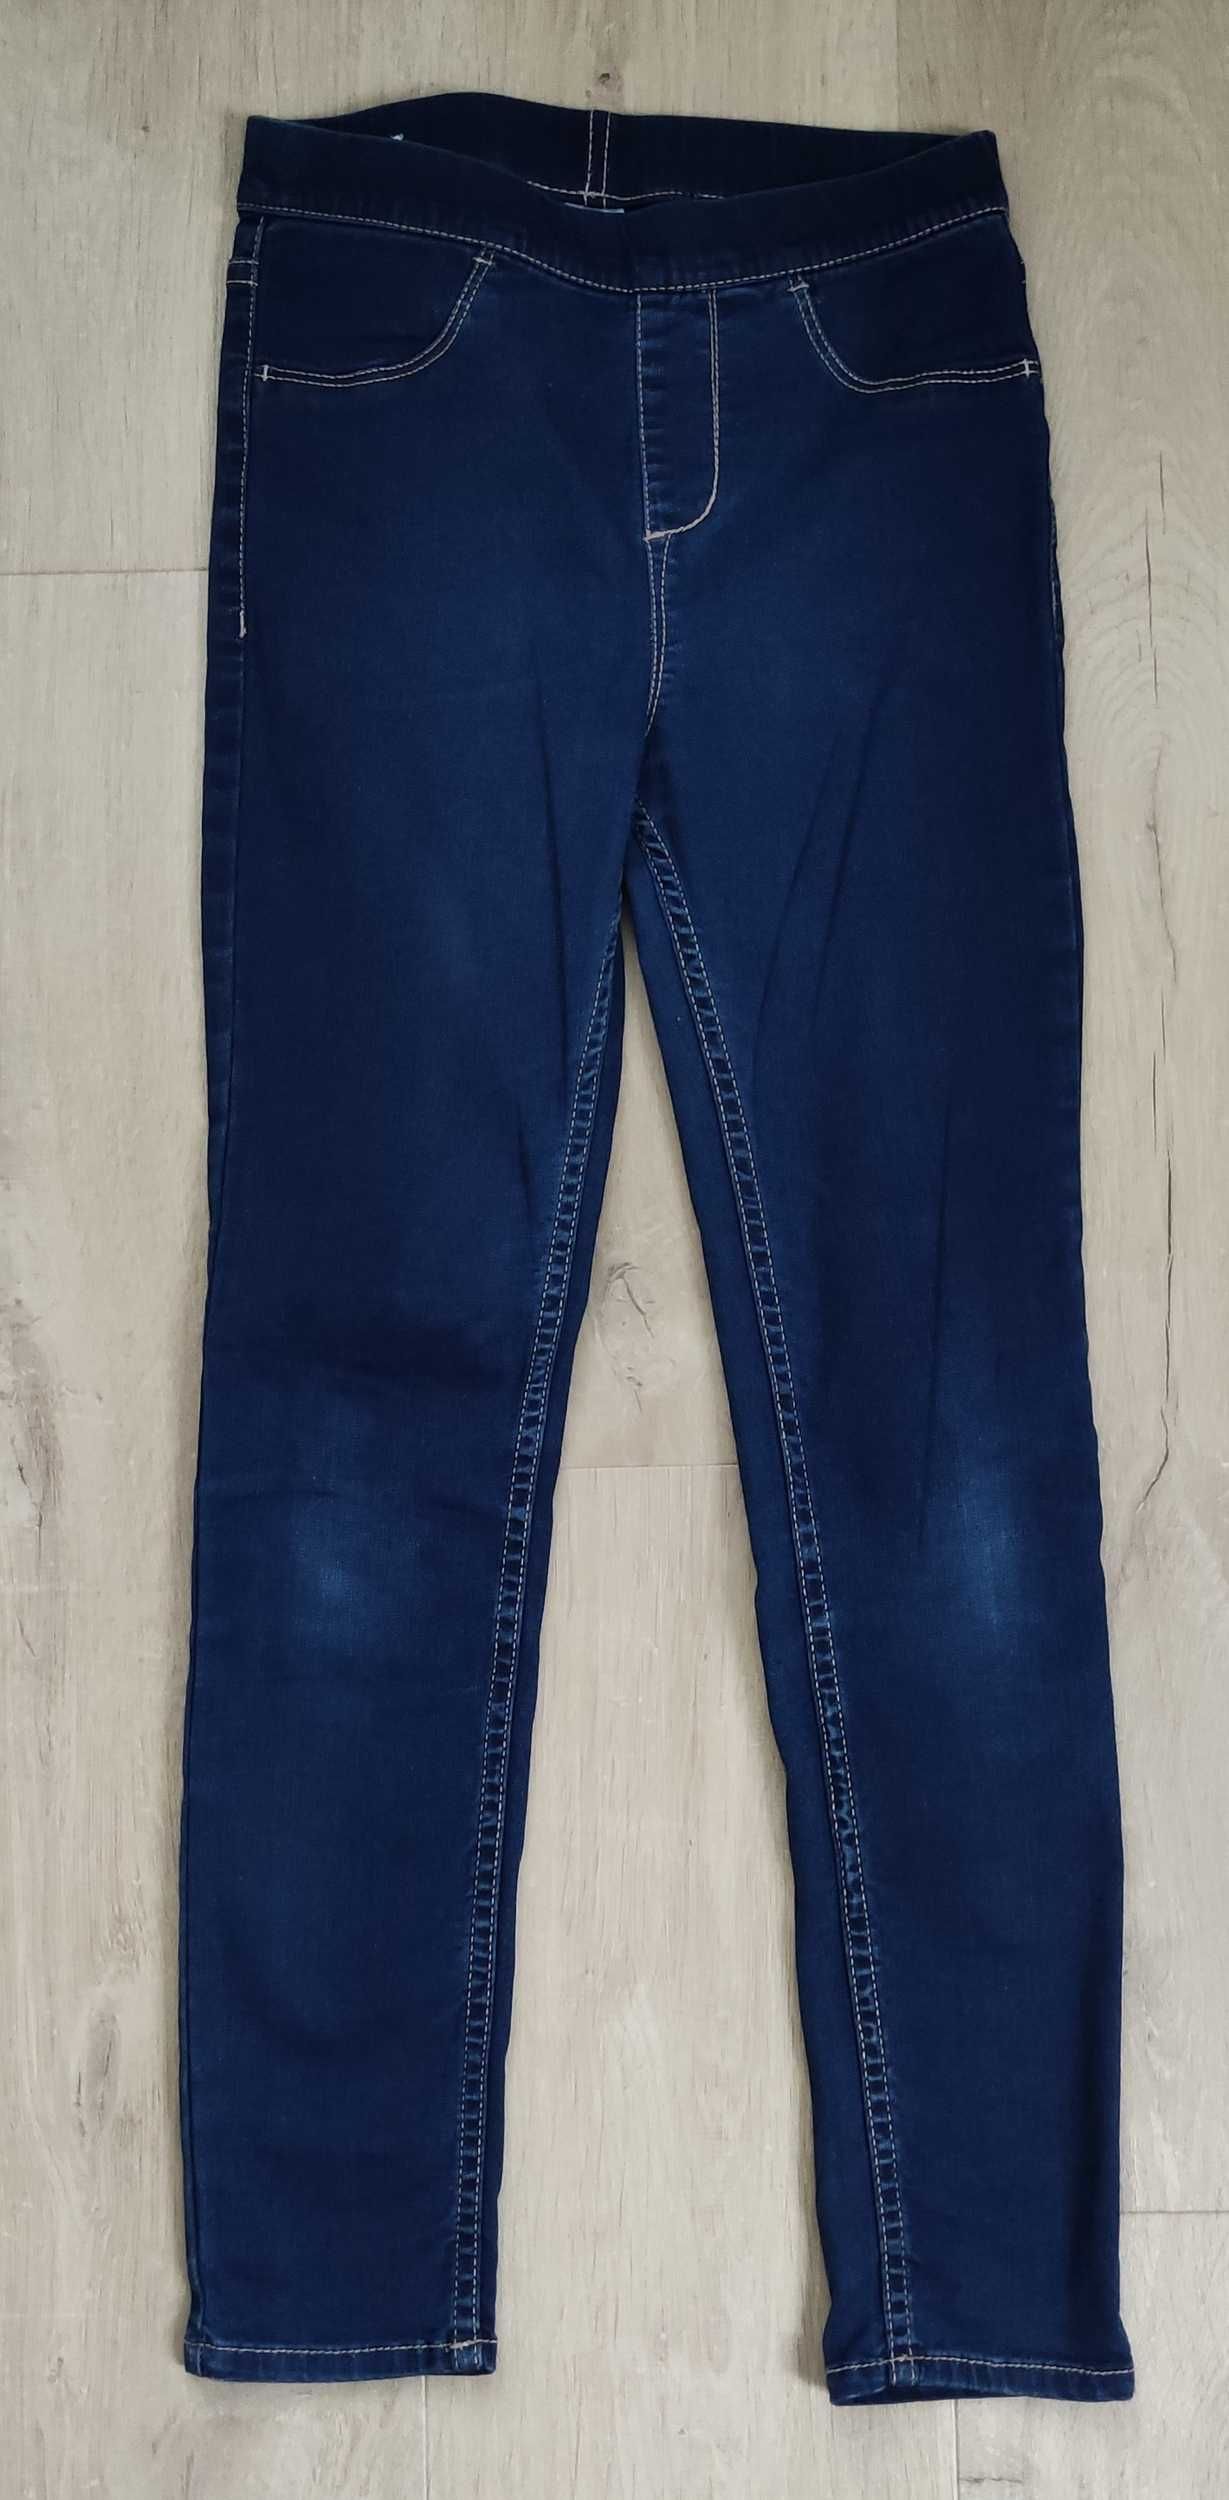 H&M spodnie jeansy 9 - 10 lat rozmiar 140